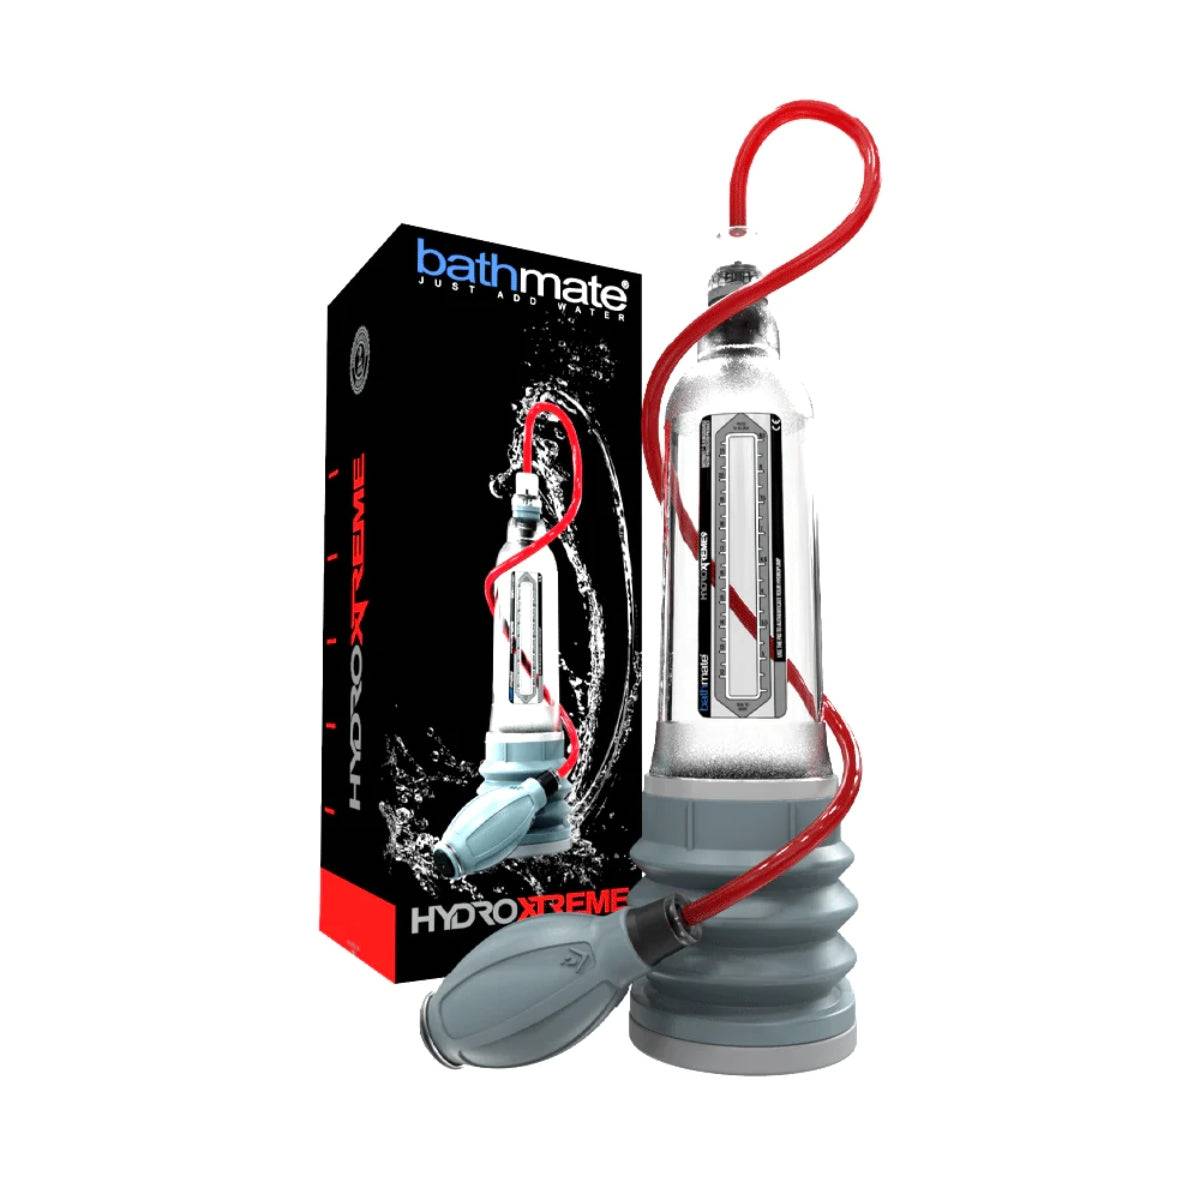 Bathmate HydroXtreme 9 Penis Pump Clear - Simply Pleasure